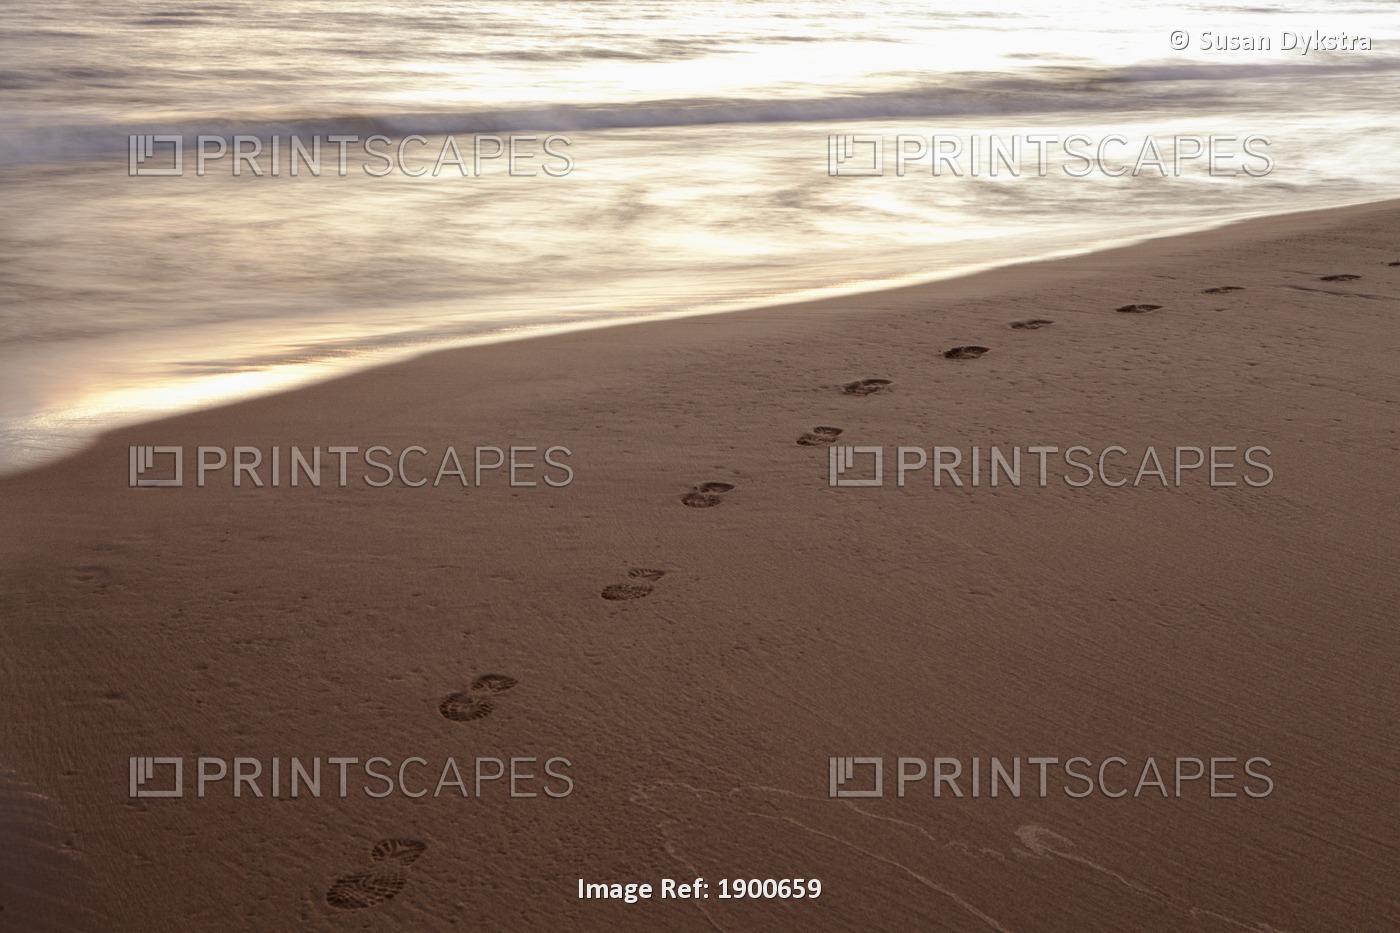  Footprints On A Beach